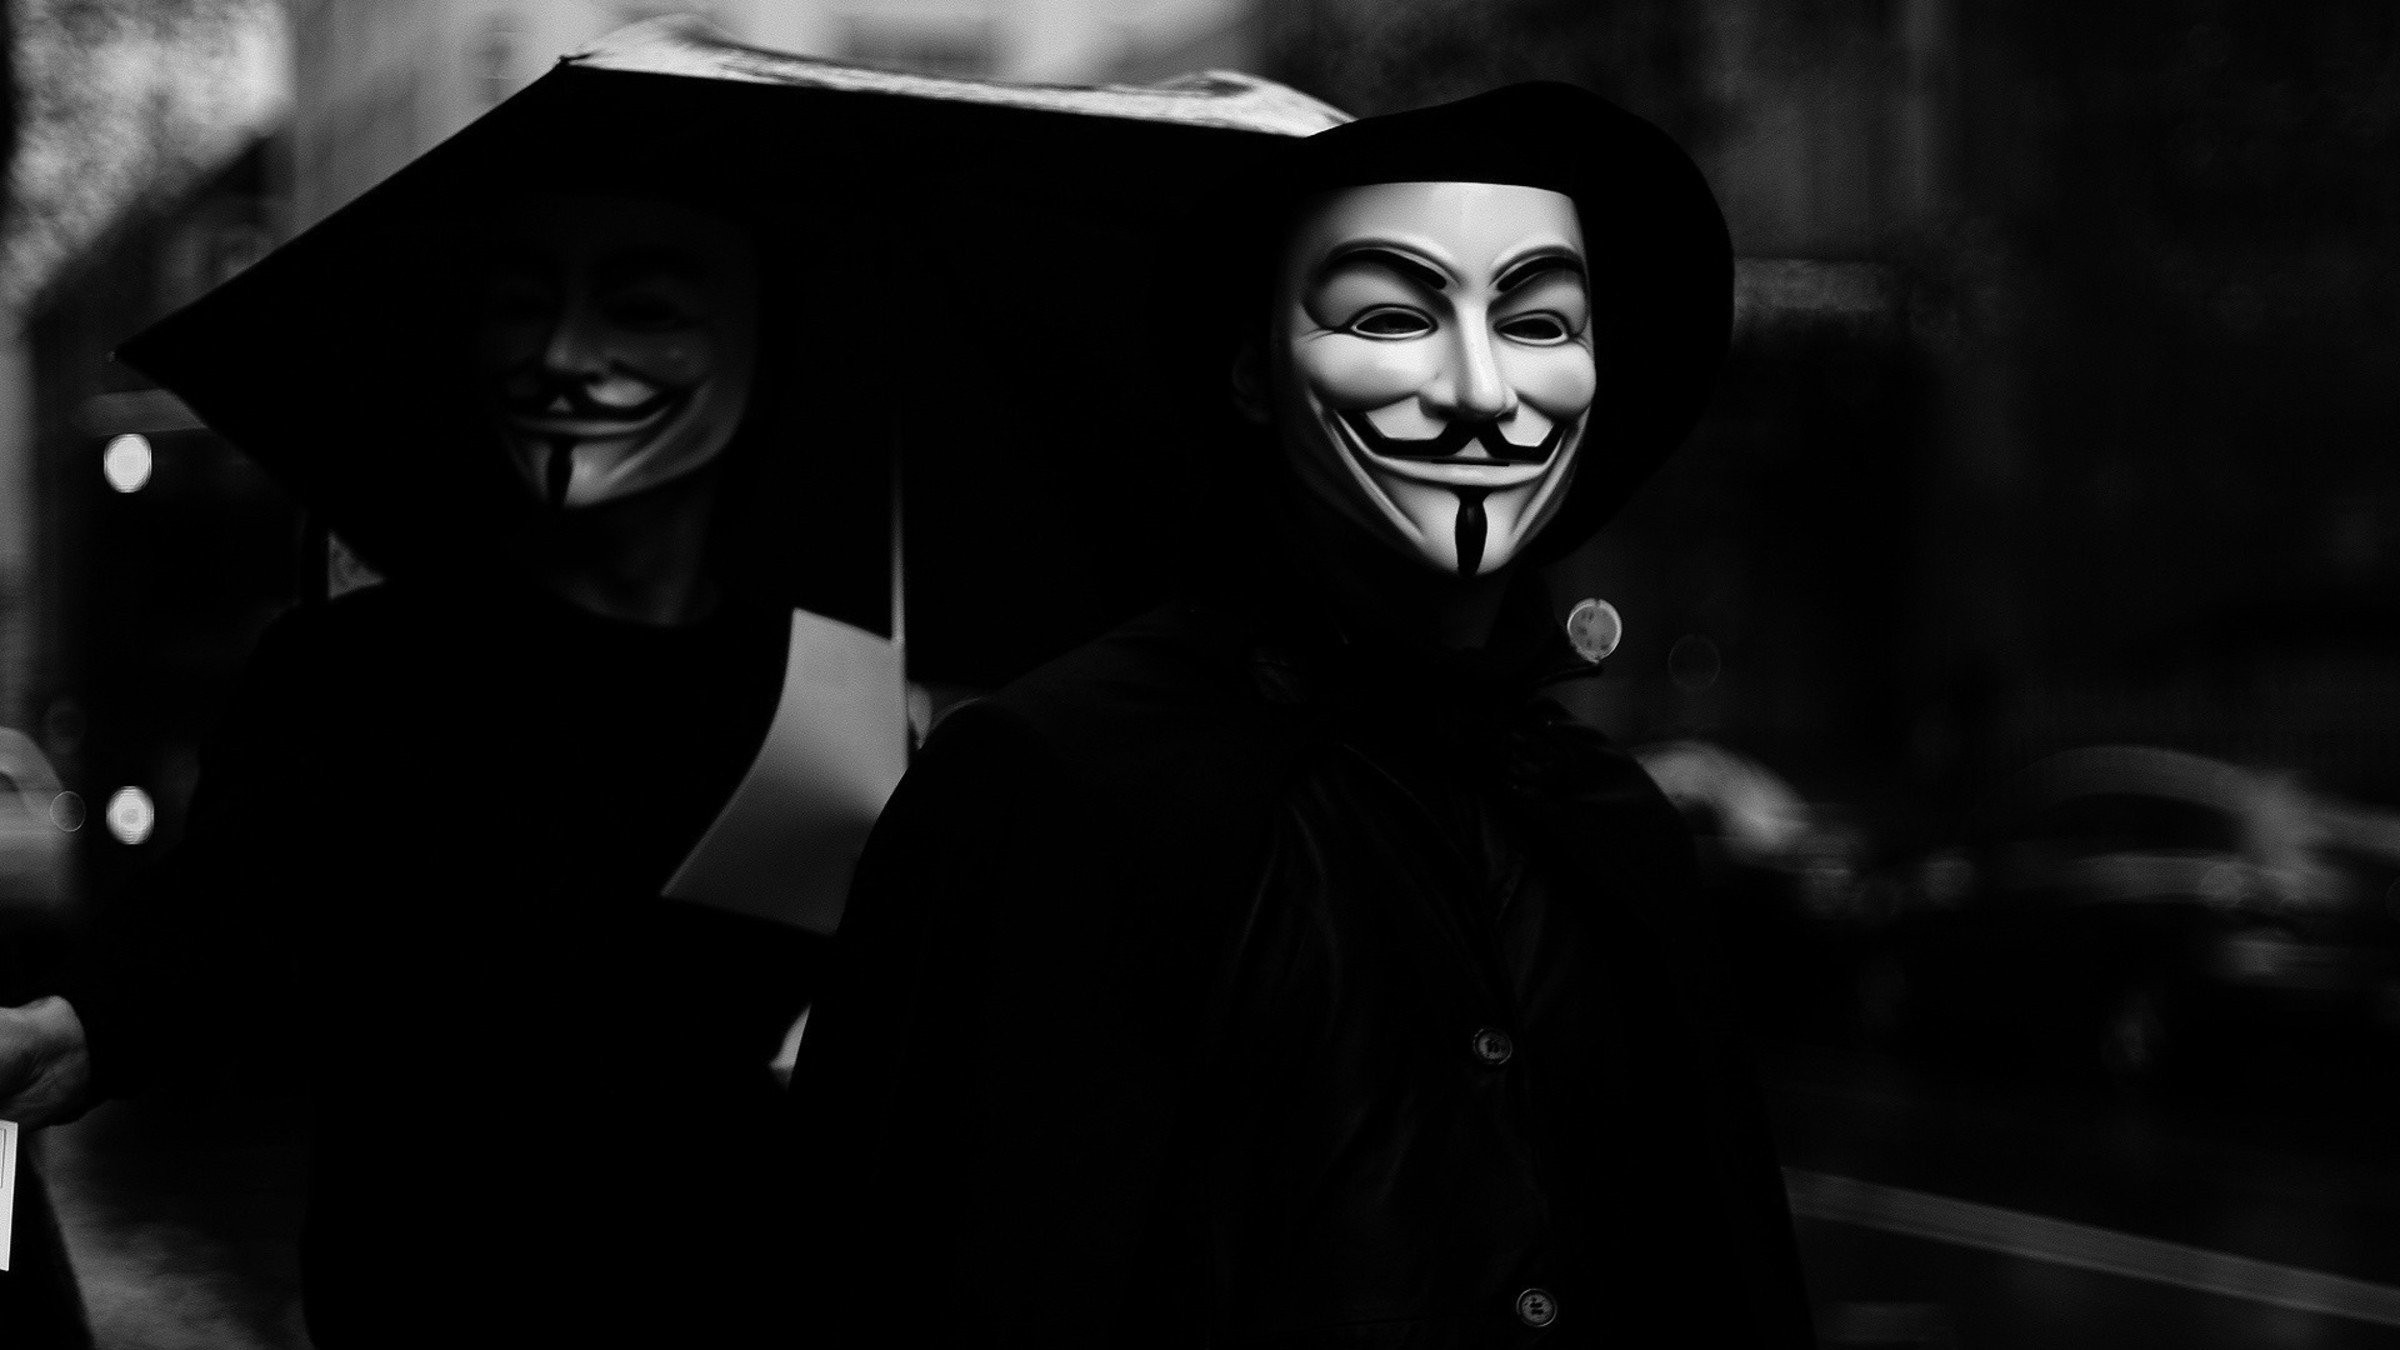 General 2400x1350 hacking Anonymous (hacker group) V for Vendetta mask Guy Fawkes mask dark monochrome umbrella